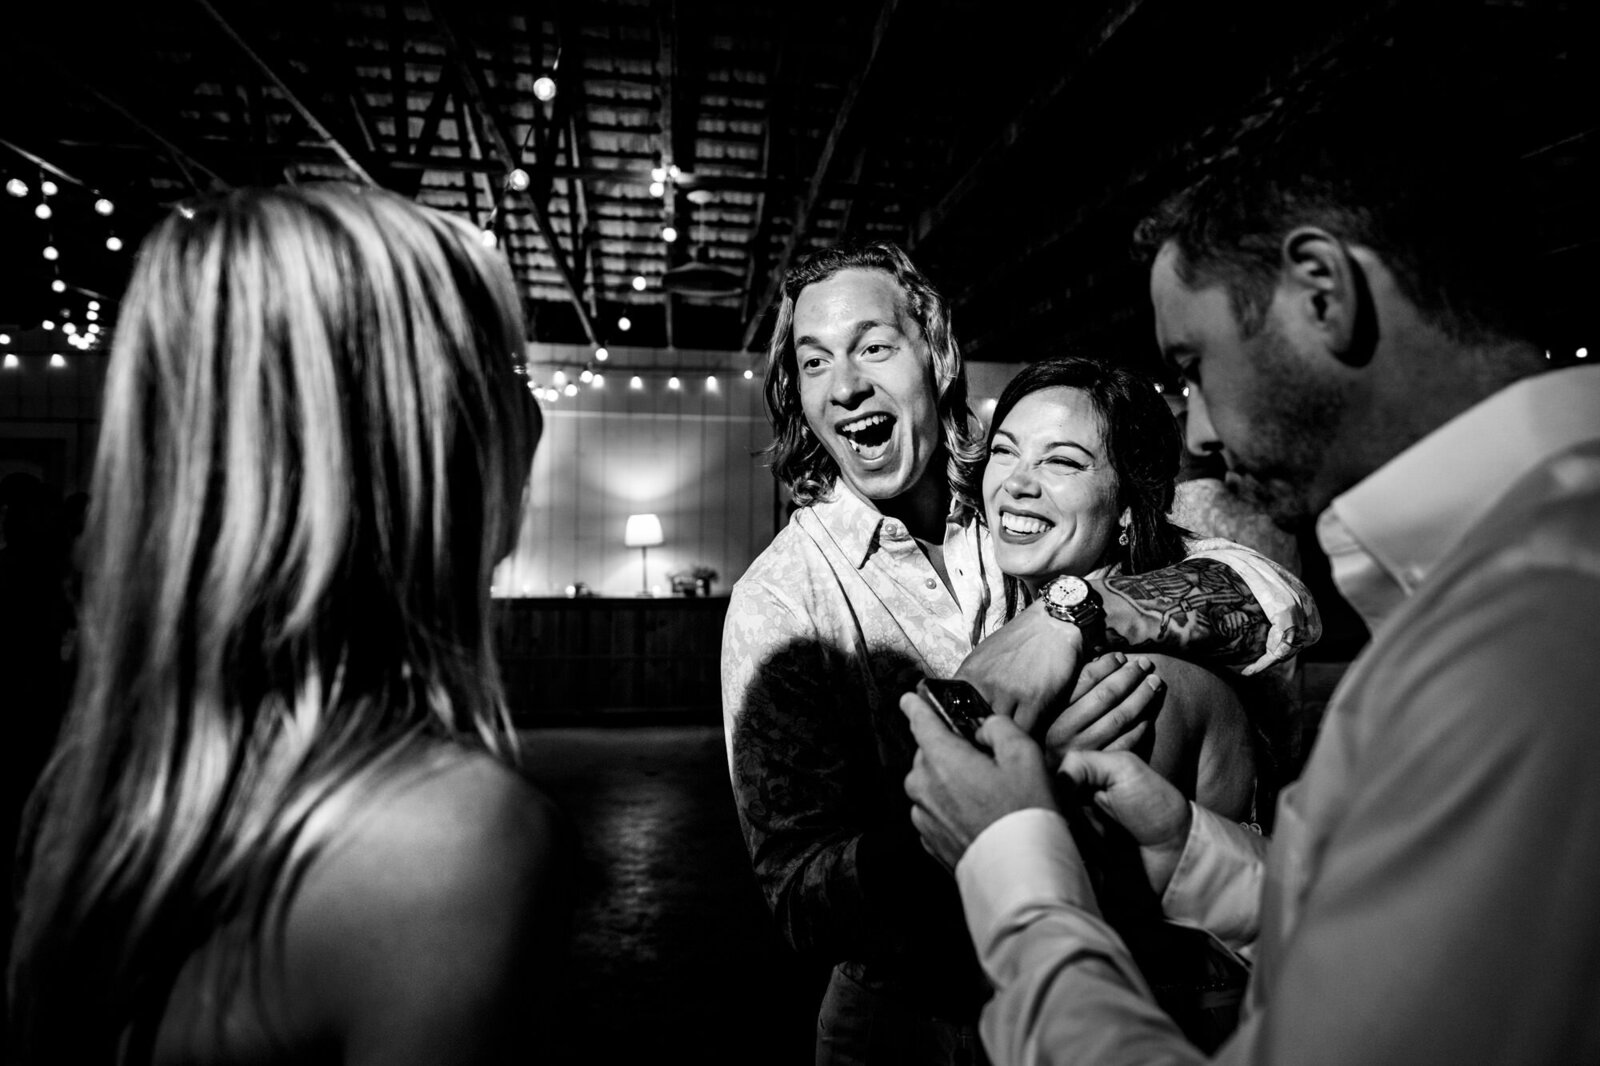 Wedding-dancefloor-photographs